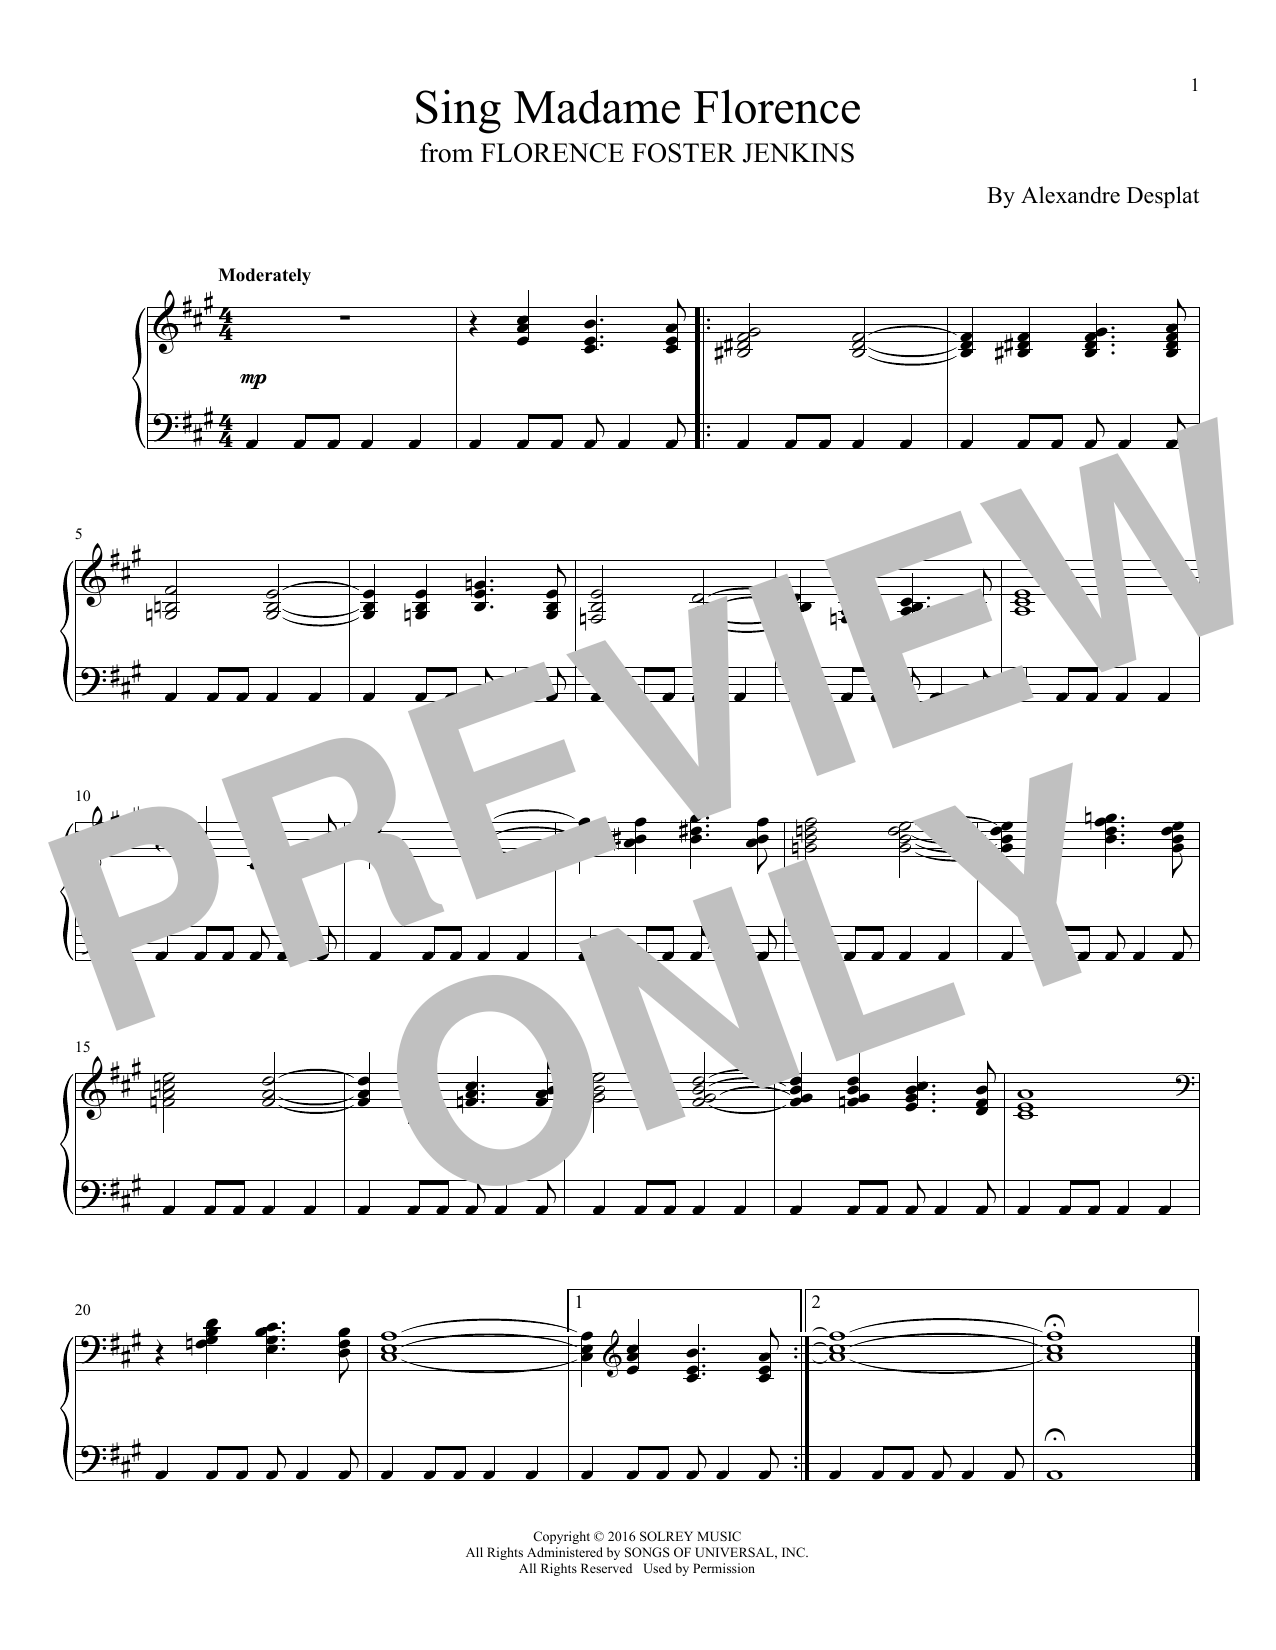 Alexandre Desplat Sing Madame Florence Sheet Music Notes & Chords for Piano - Download or Print PDF